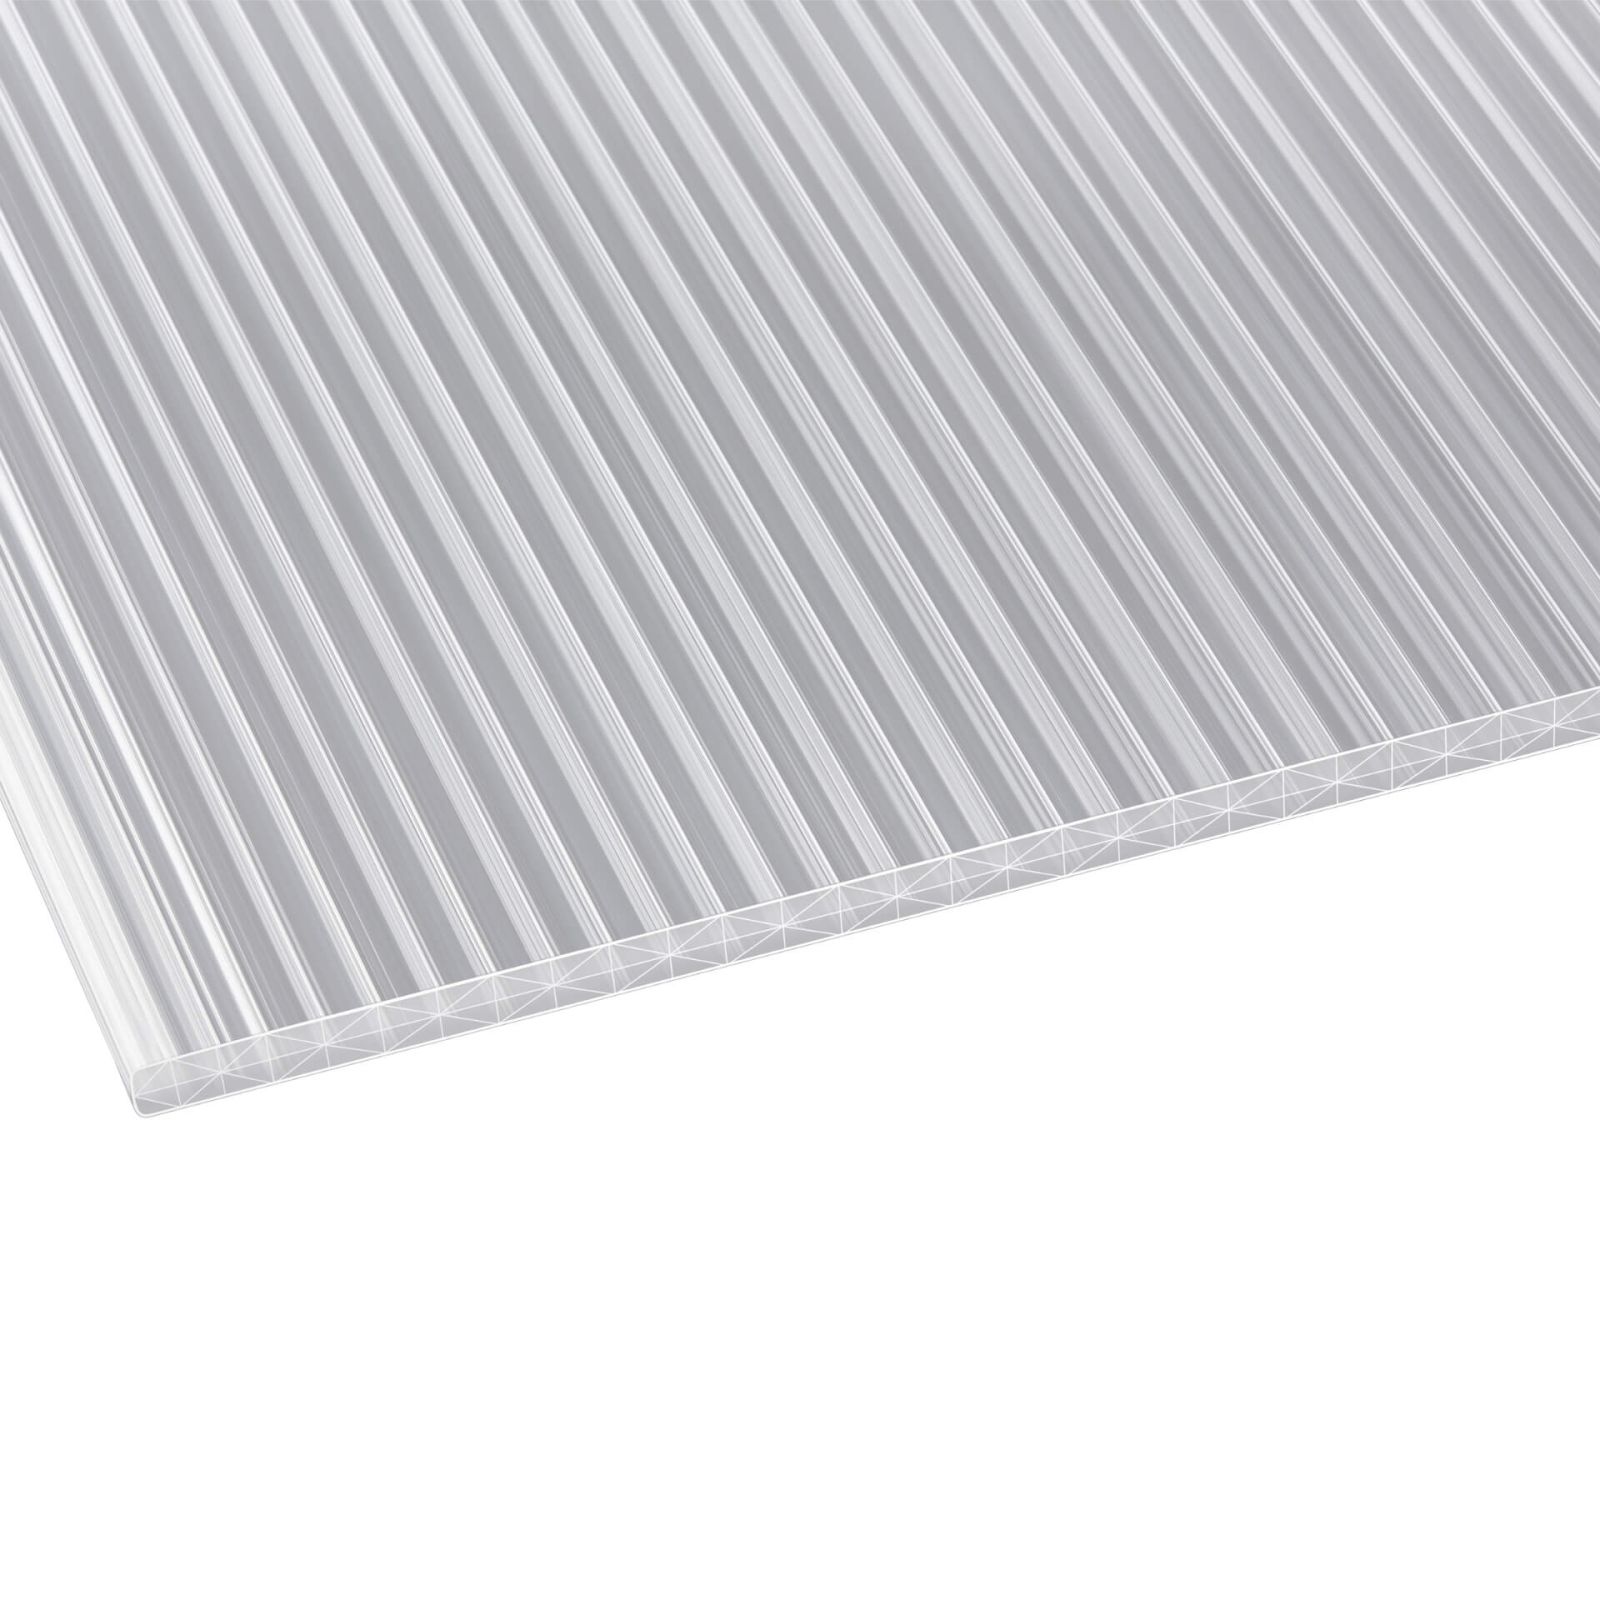 Polycarbonat Stegplatte | 16 mm | Breite 980 mm | Klar | Extra stark | 2000 mm